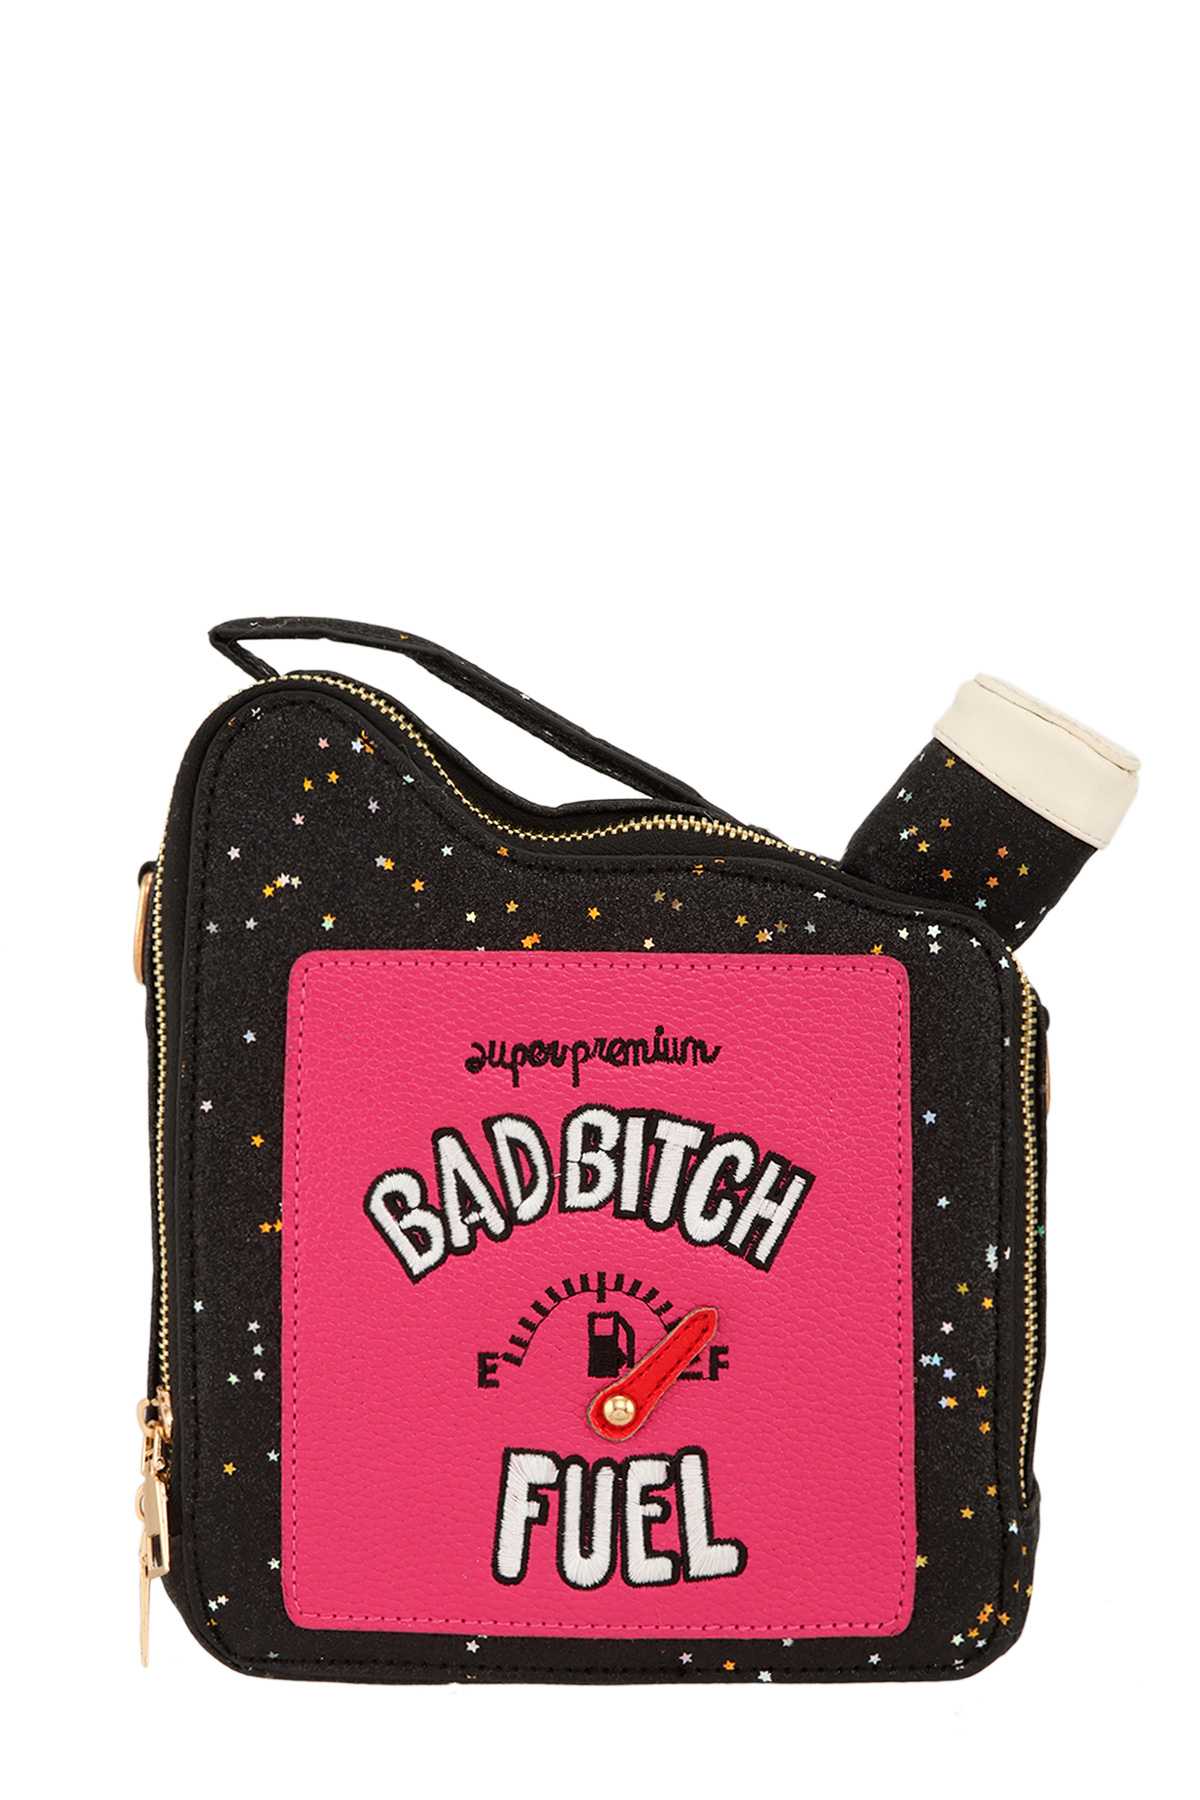 Bad bitch Square Crossbody Bag